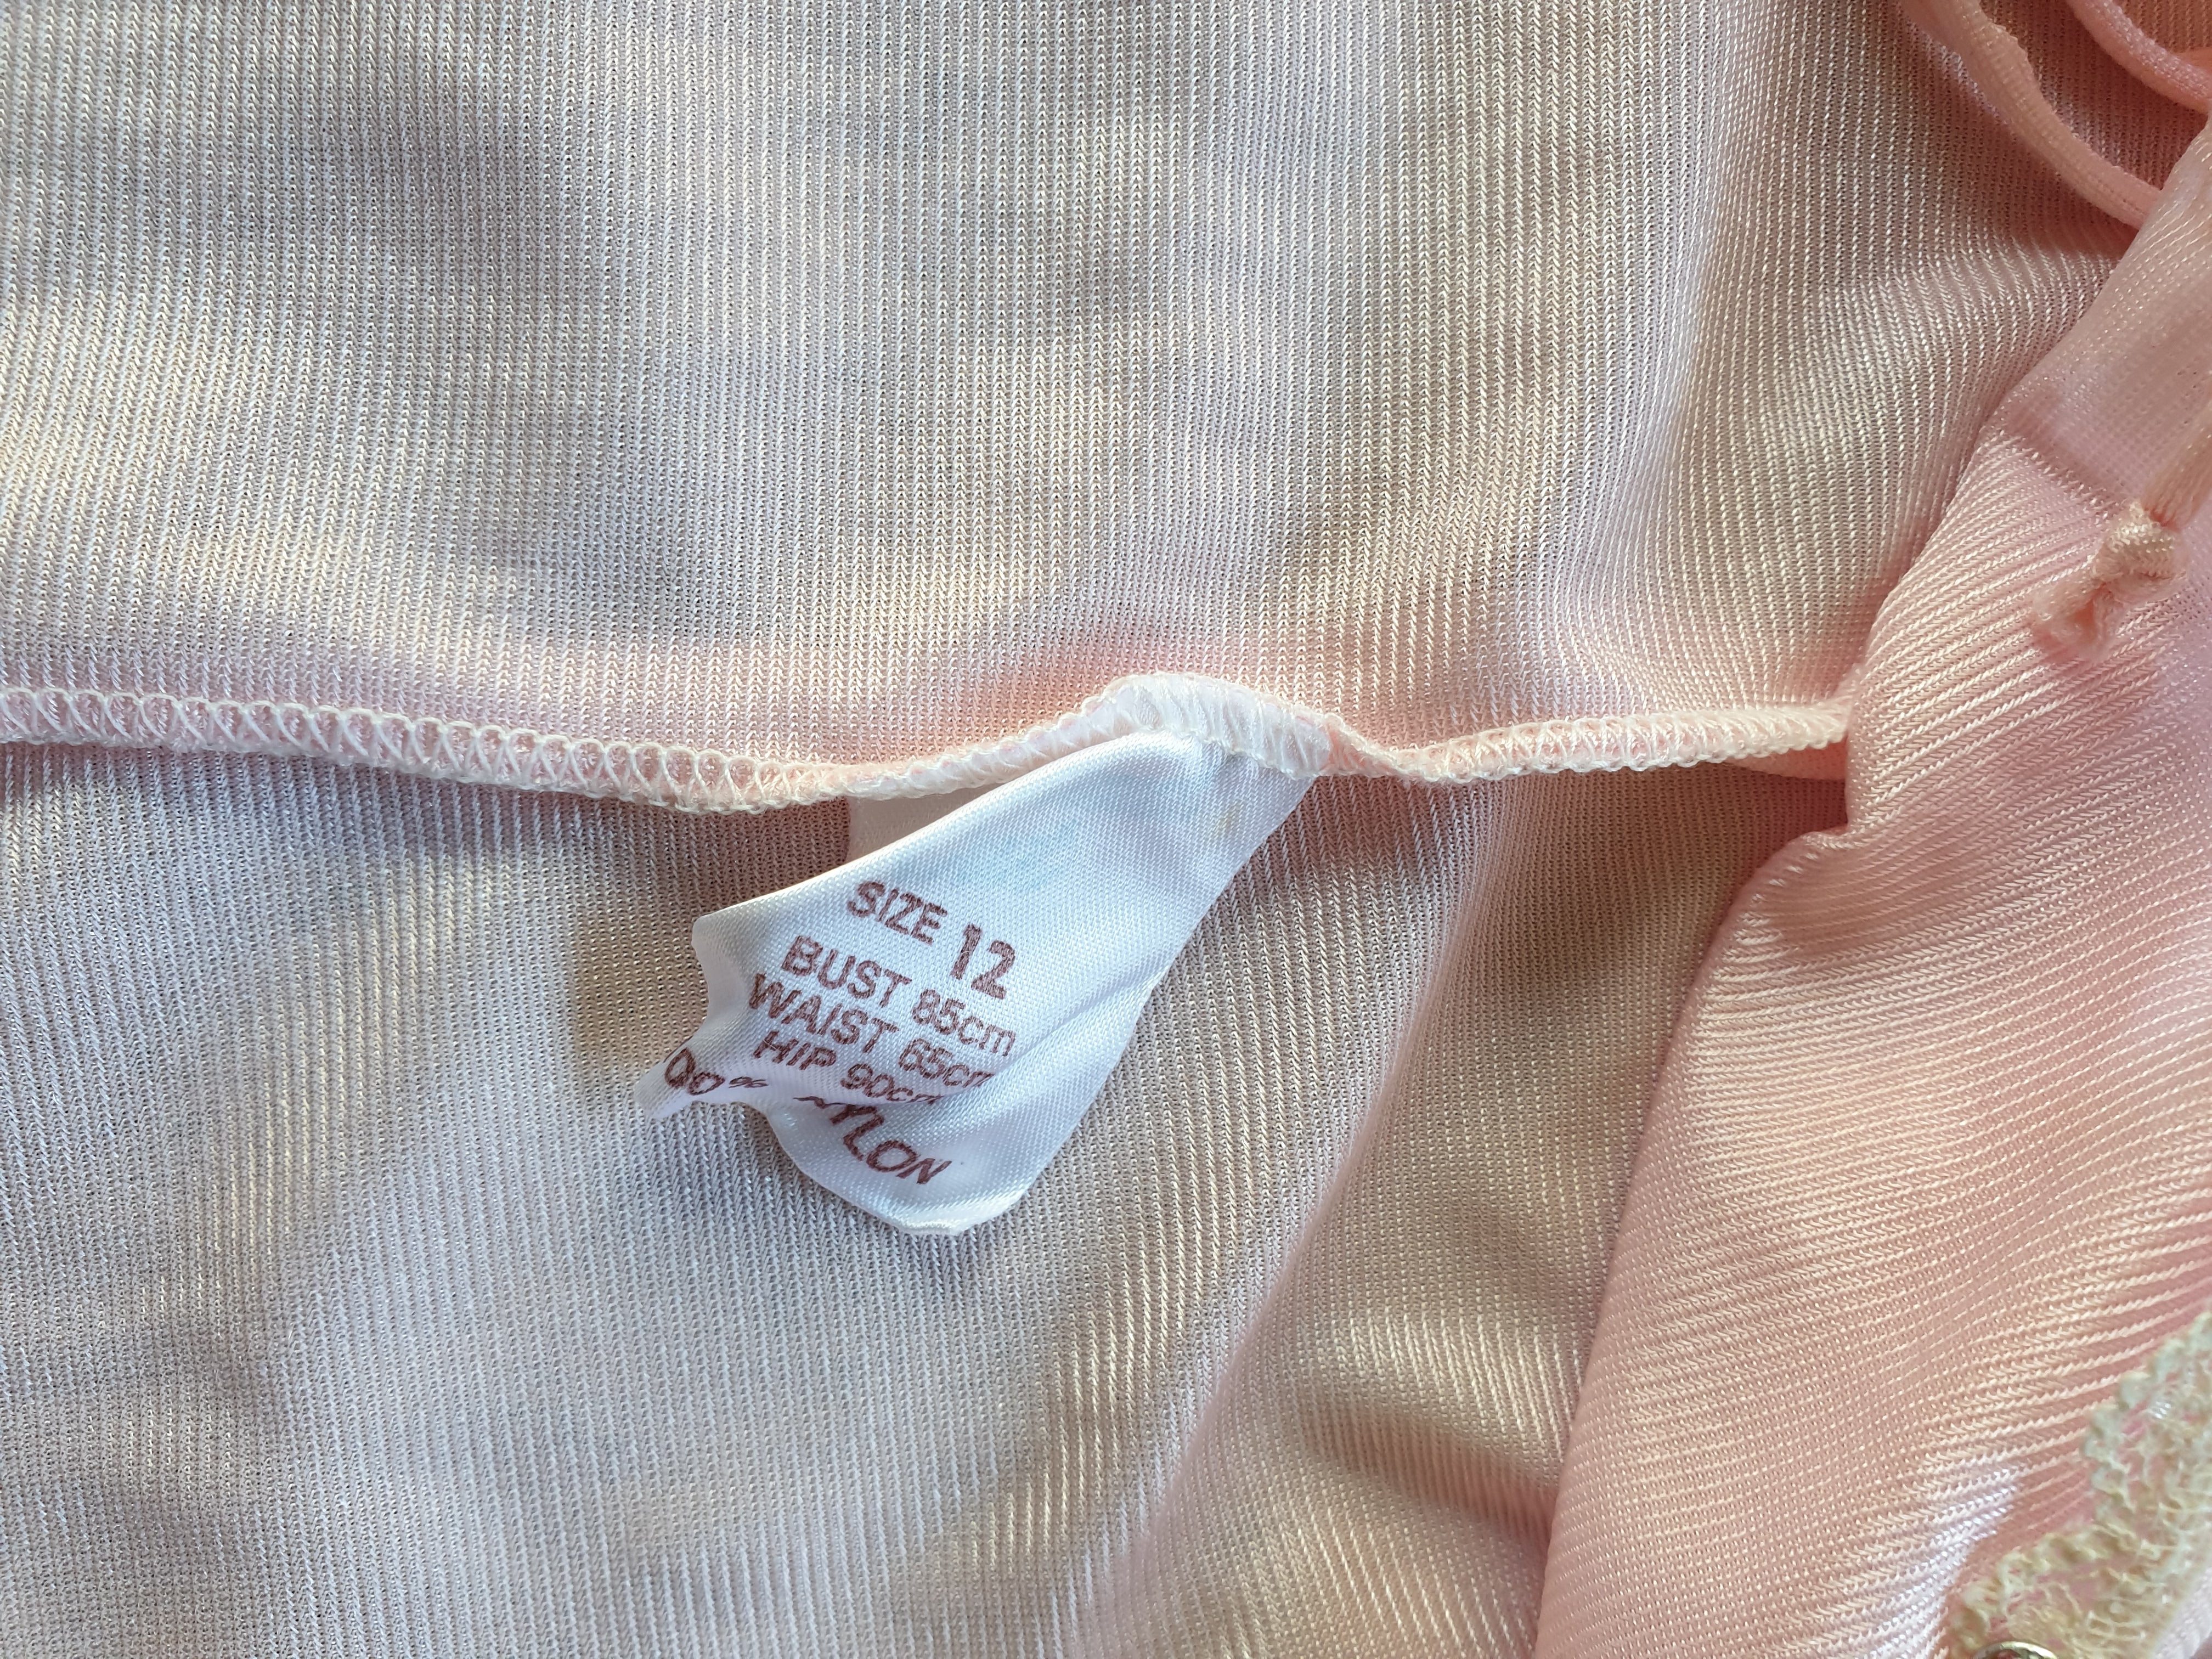 Vintage 70s Baby Pink Cropped Bed Jacket